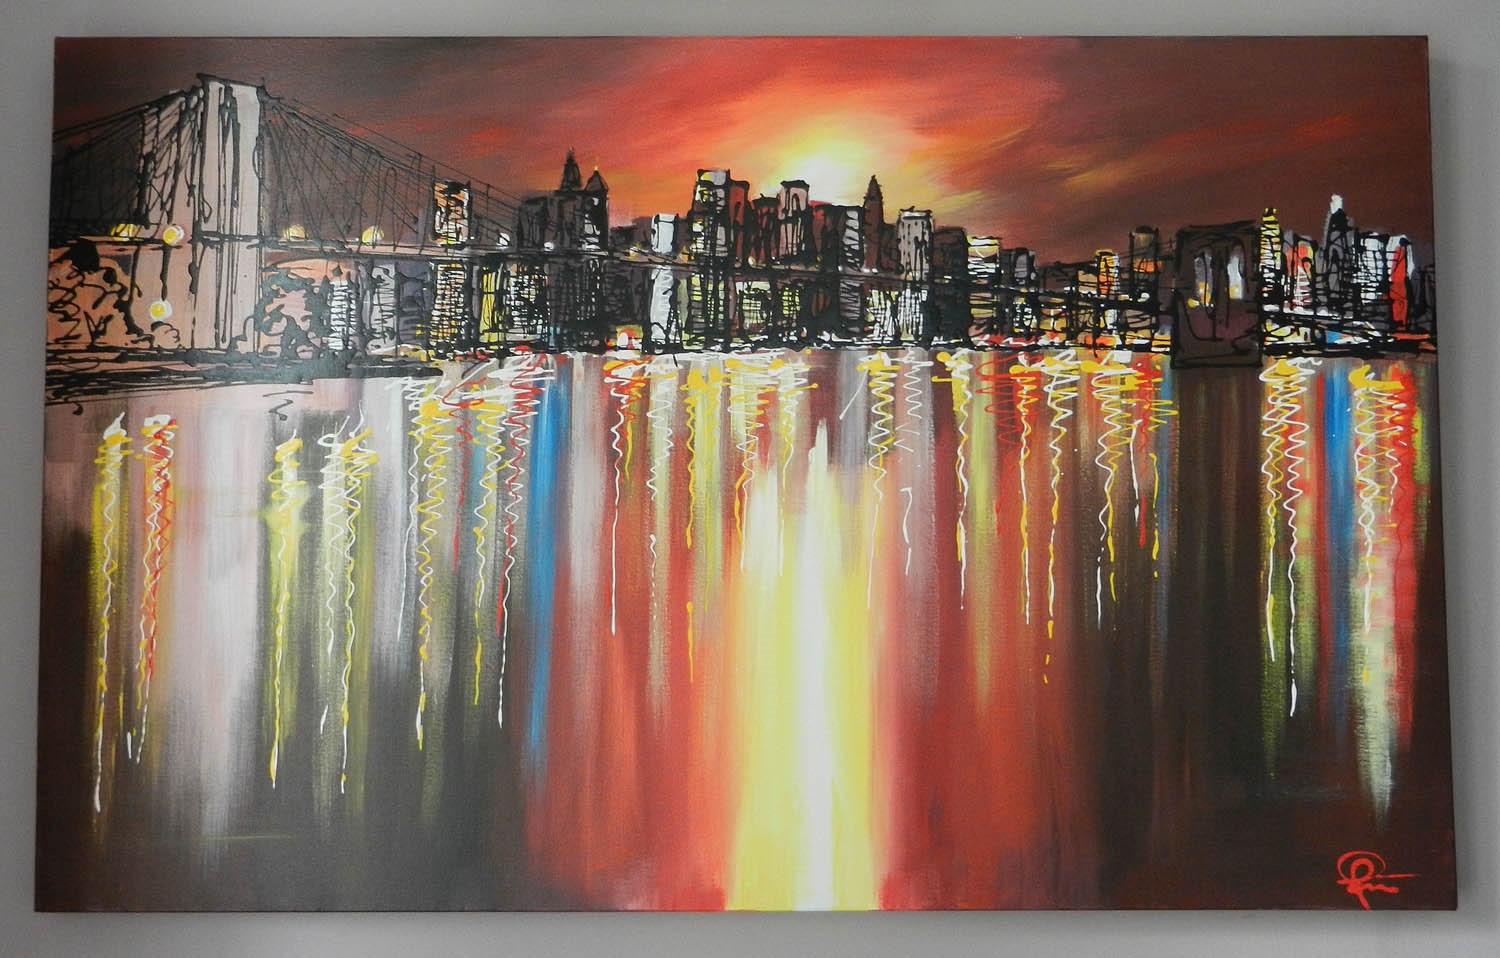 The City that never sleeps by Paul Kenton, New York | Landscape | Customer Sale